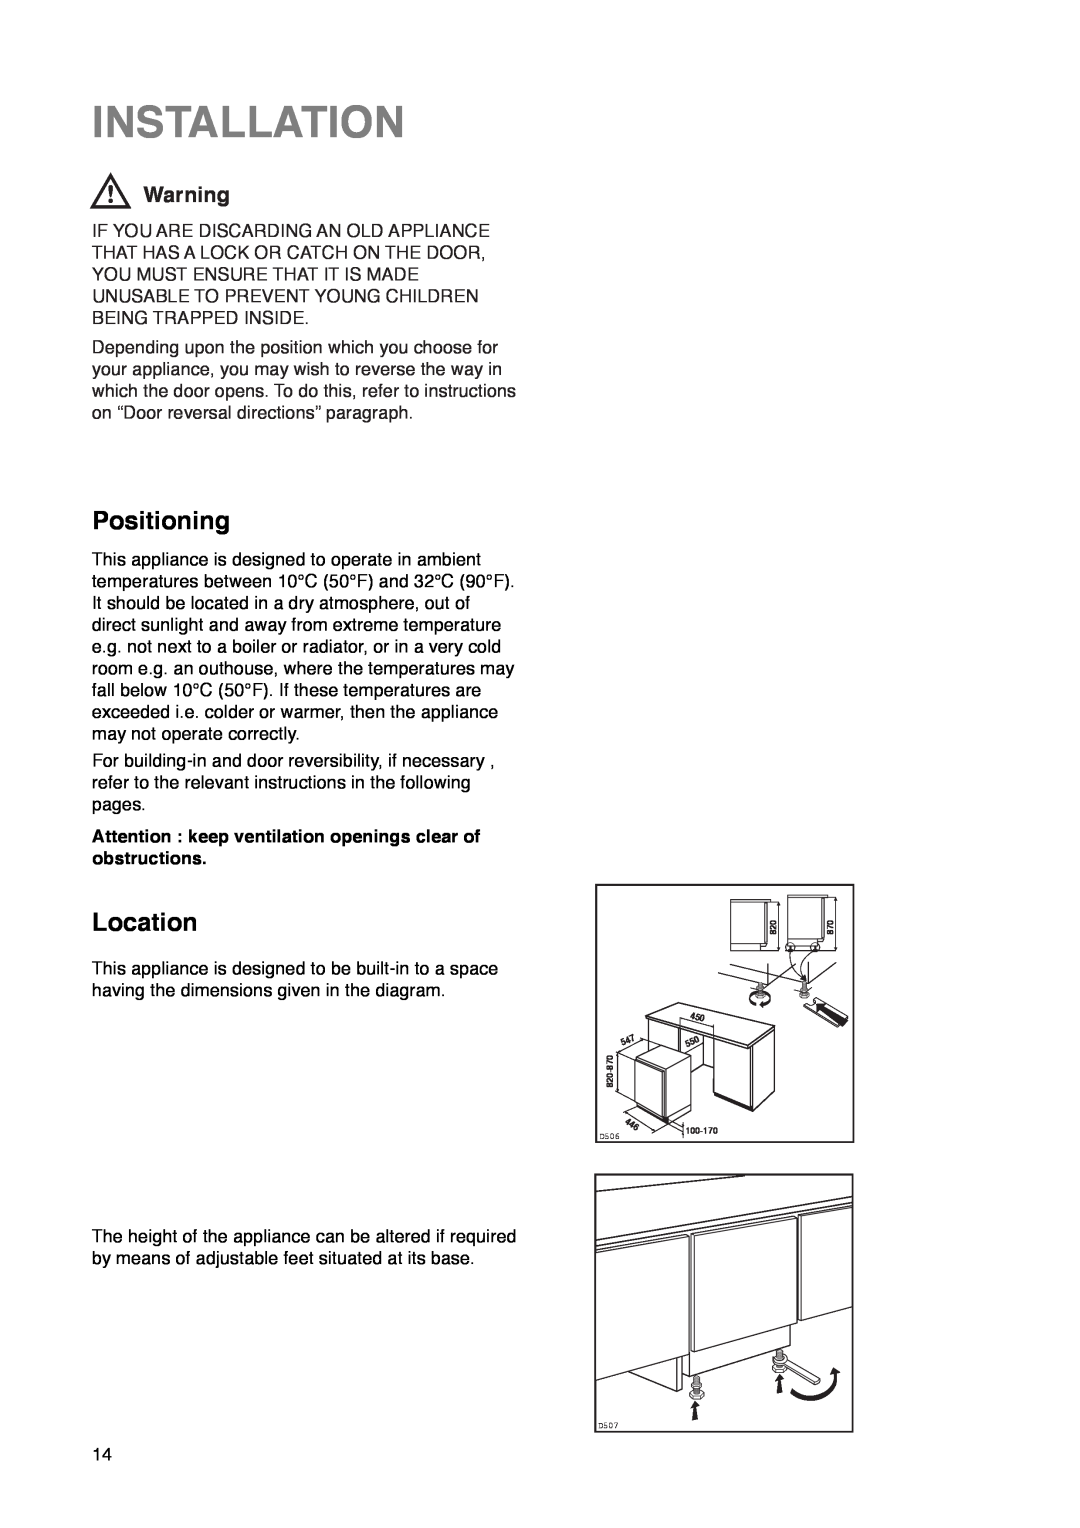 Zanussi ZU 7115 manual Installation, Positioning, Location 